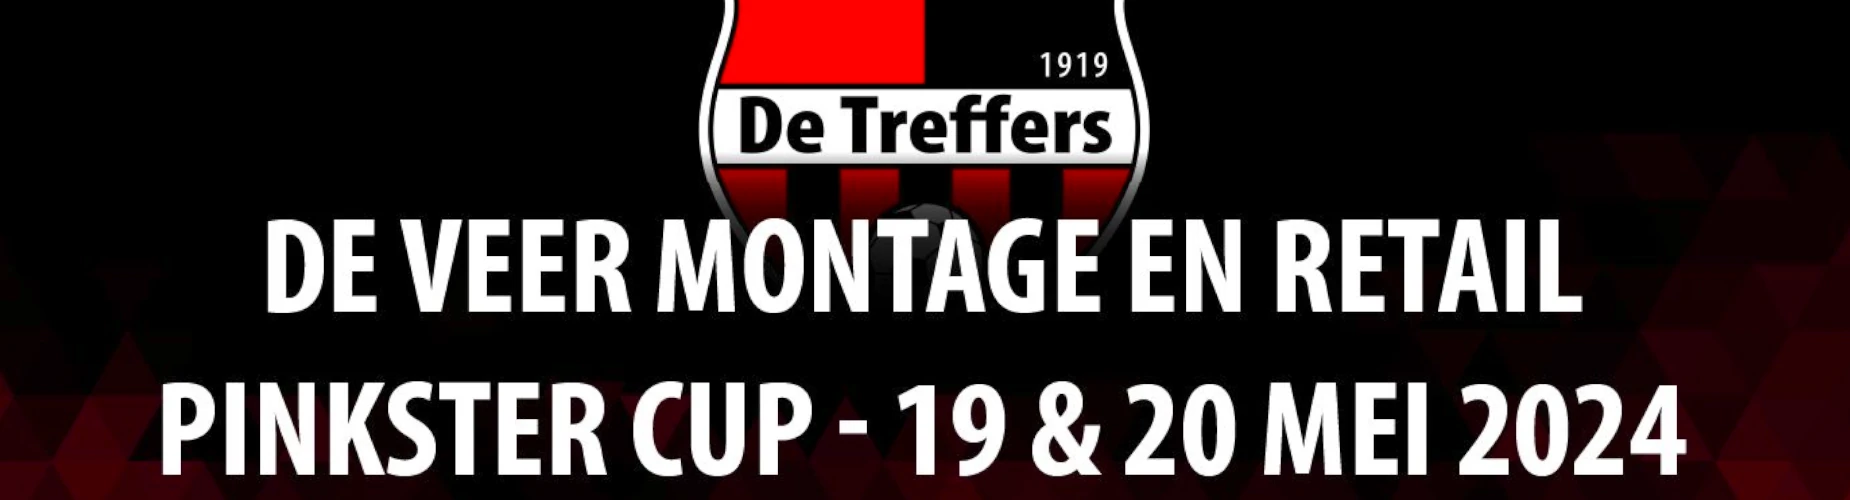 Banner - JO13 - De Veer Montage en Retail Pinkster Cup - De Treffers - Groesbeek